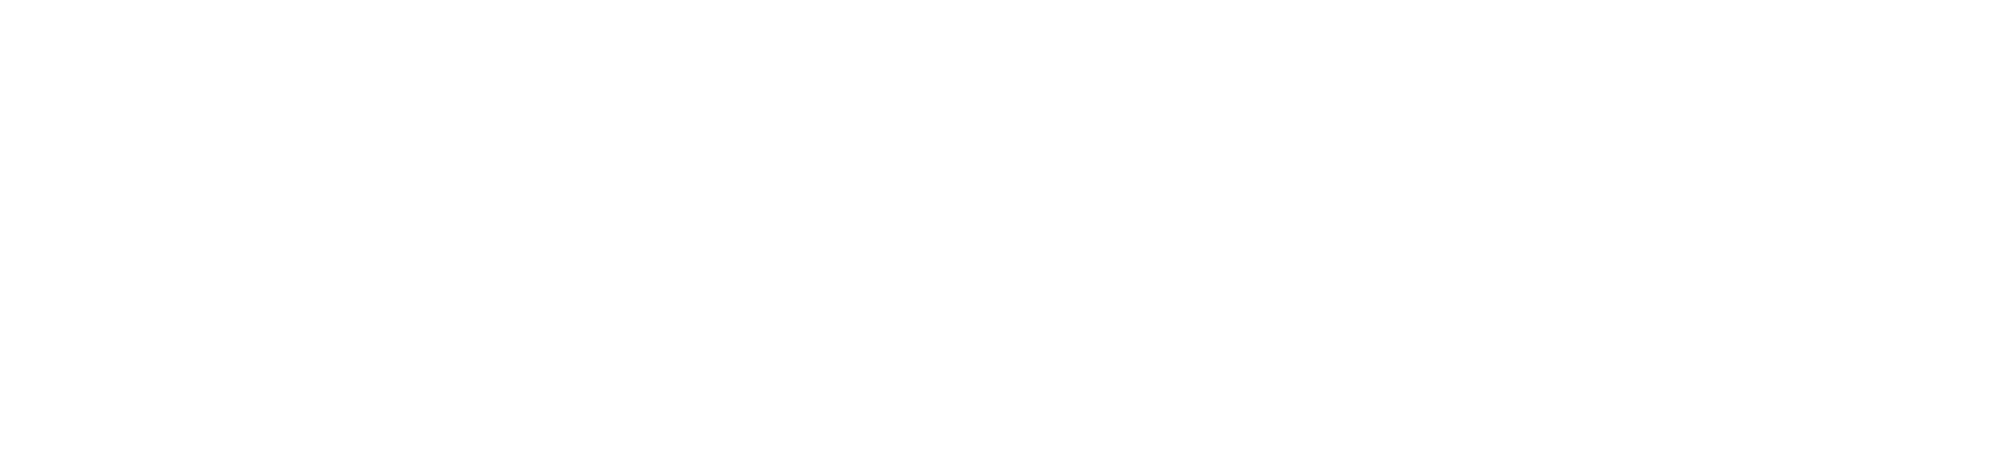 Lumix Logo - Panasonic Lumix